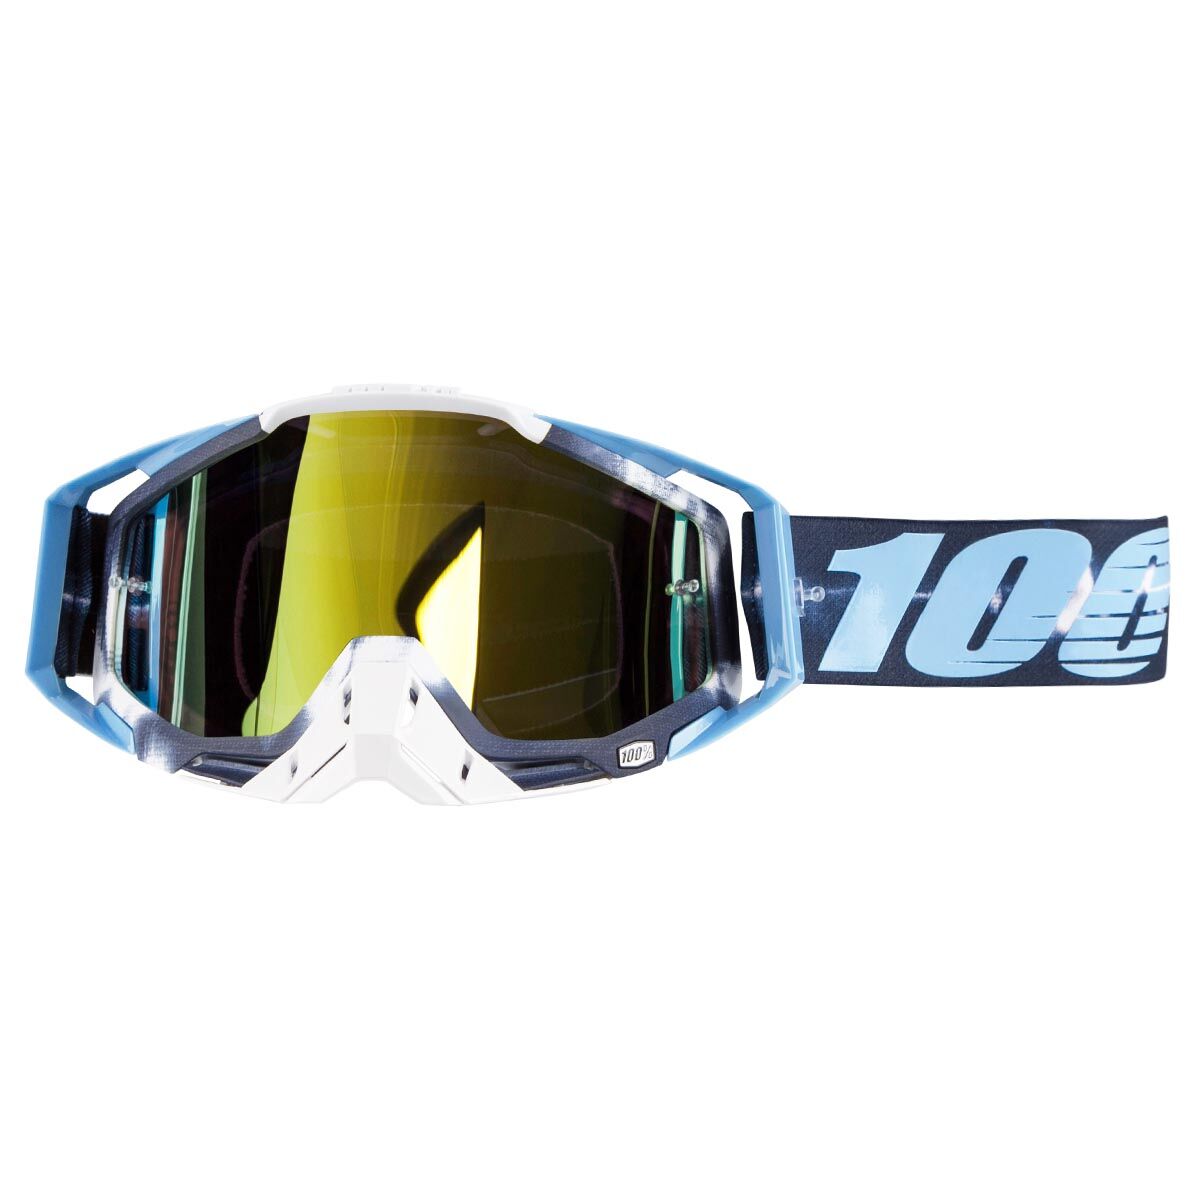 100% Masque Racecraft - Taille unique - Bleu